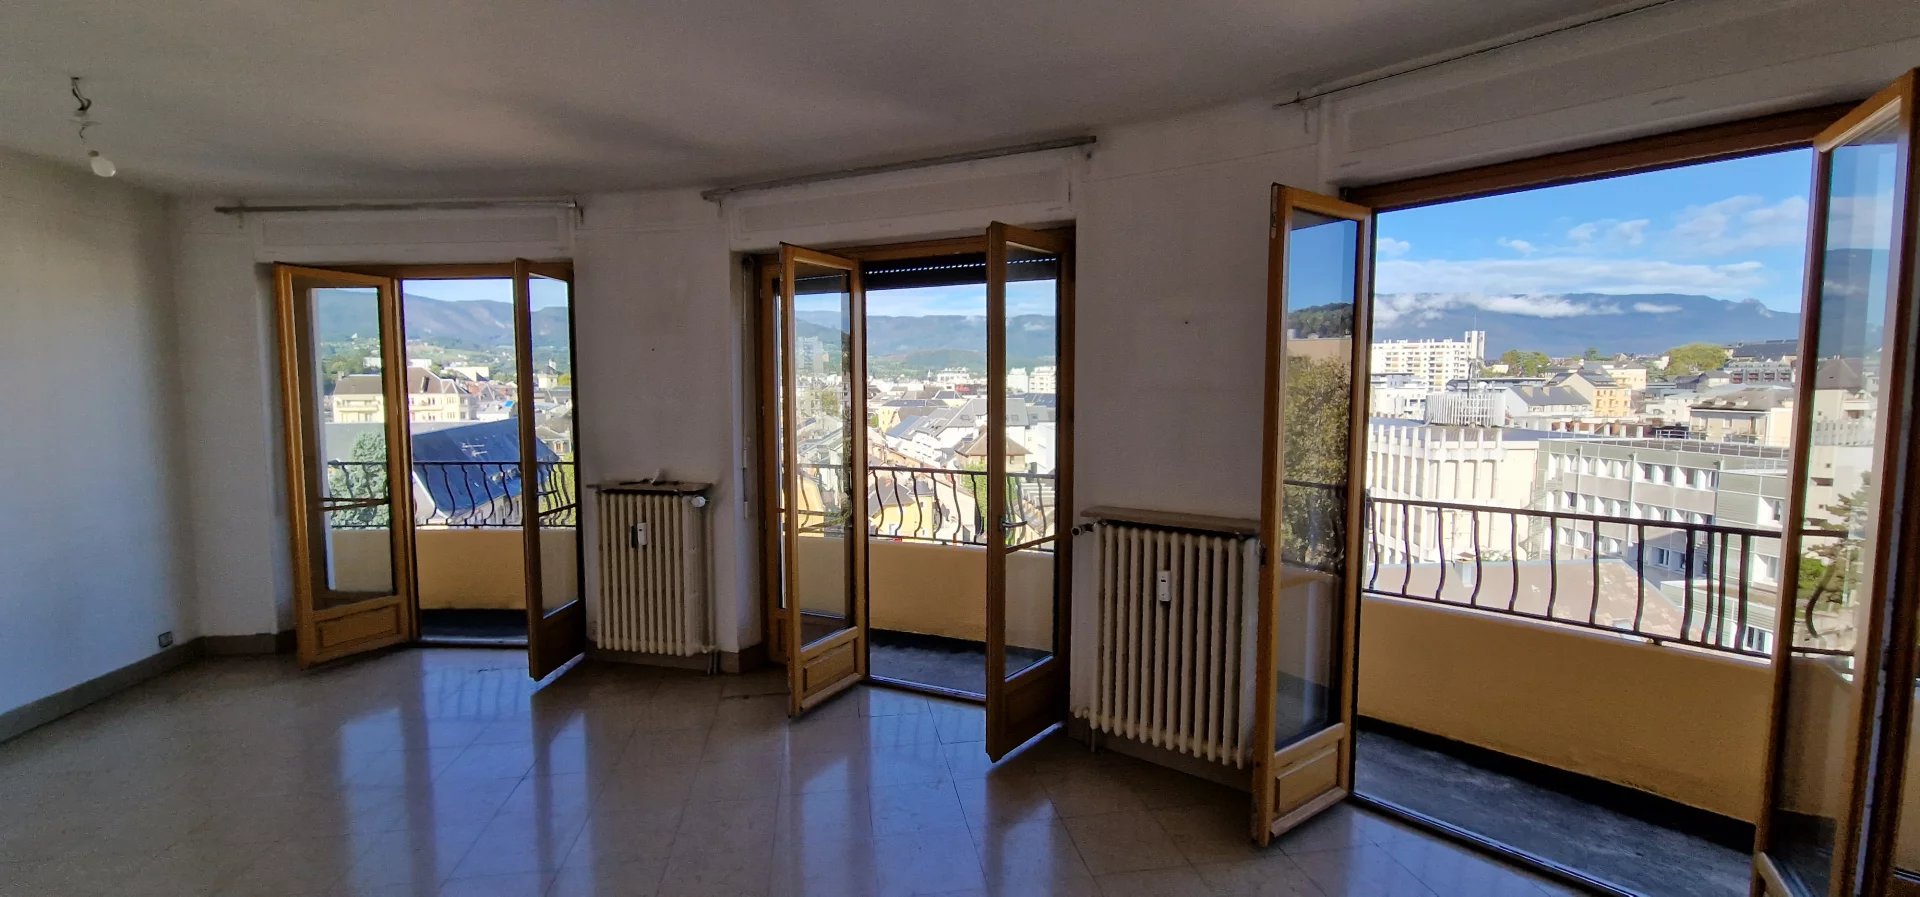 Sale Apartment - Chambéry